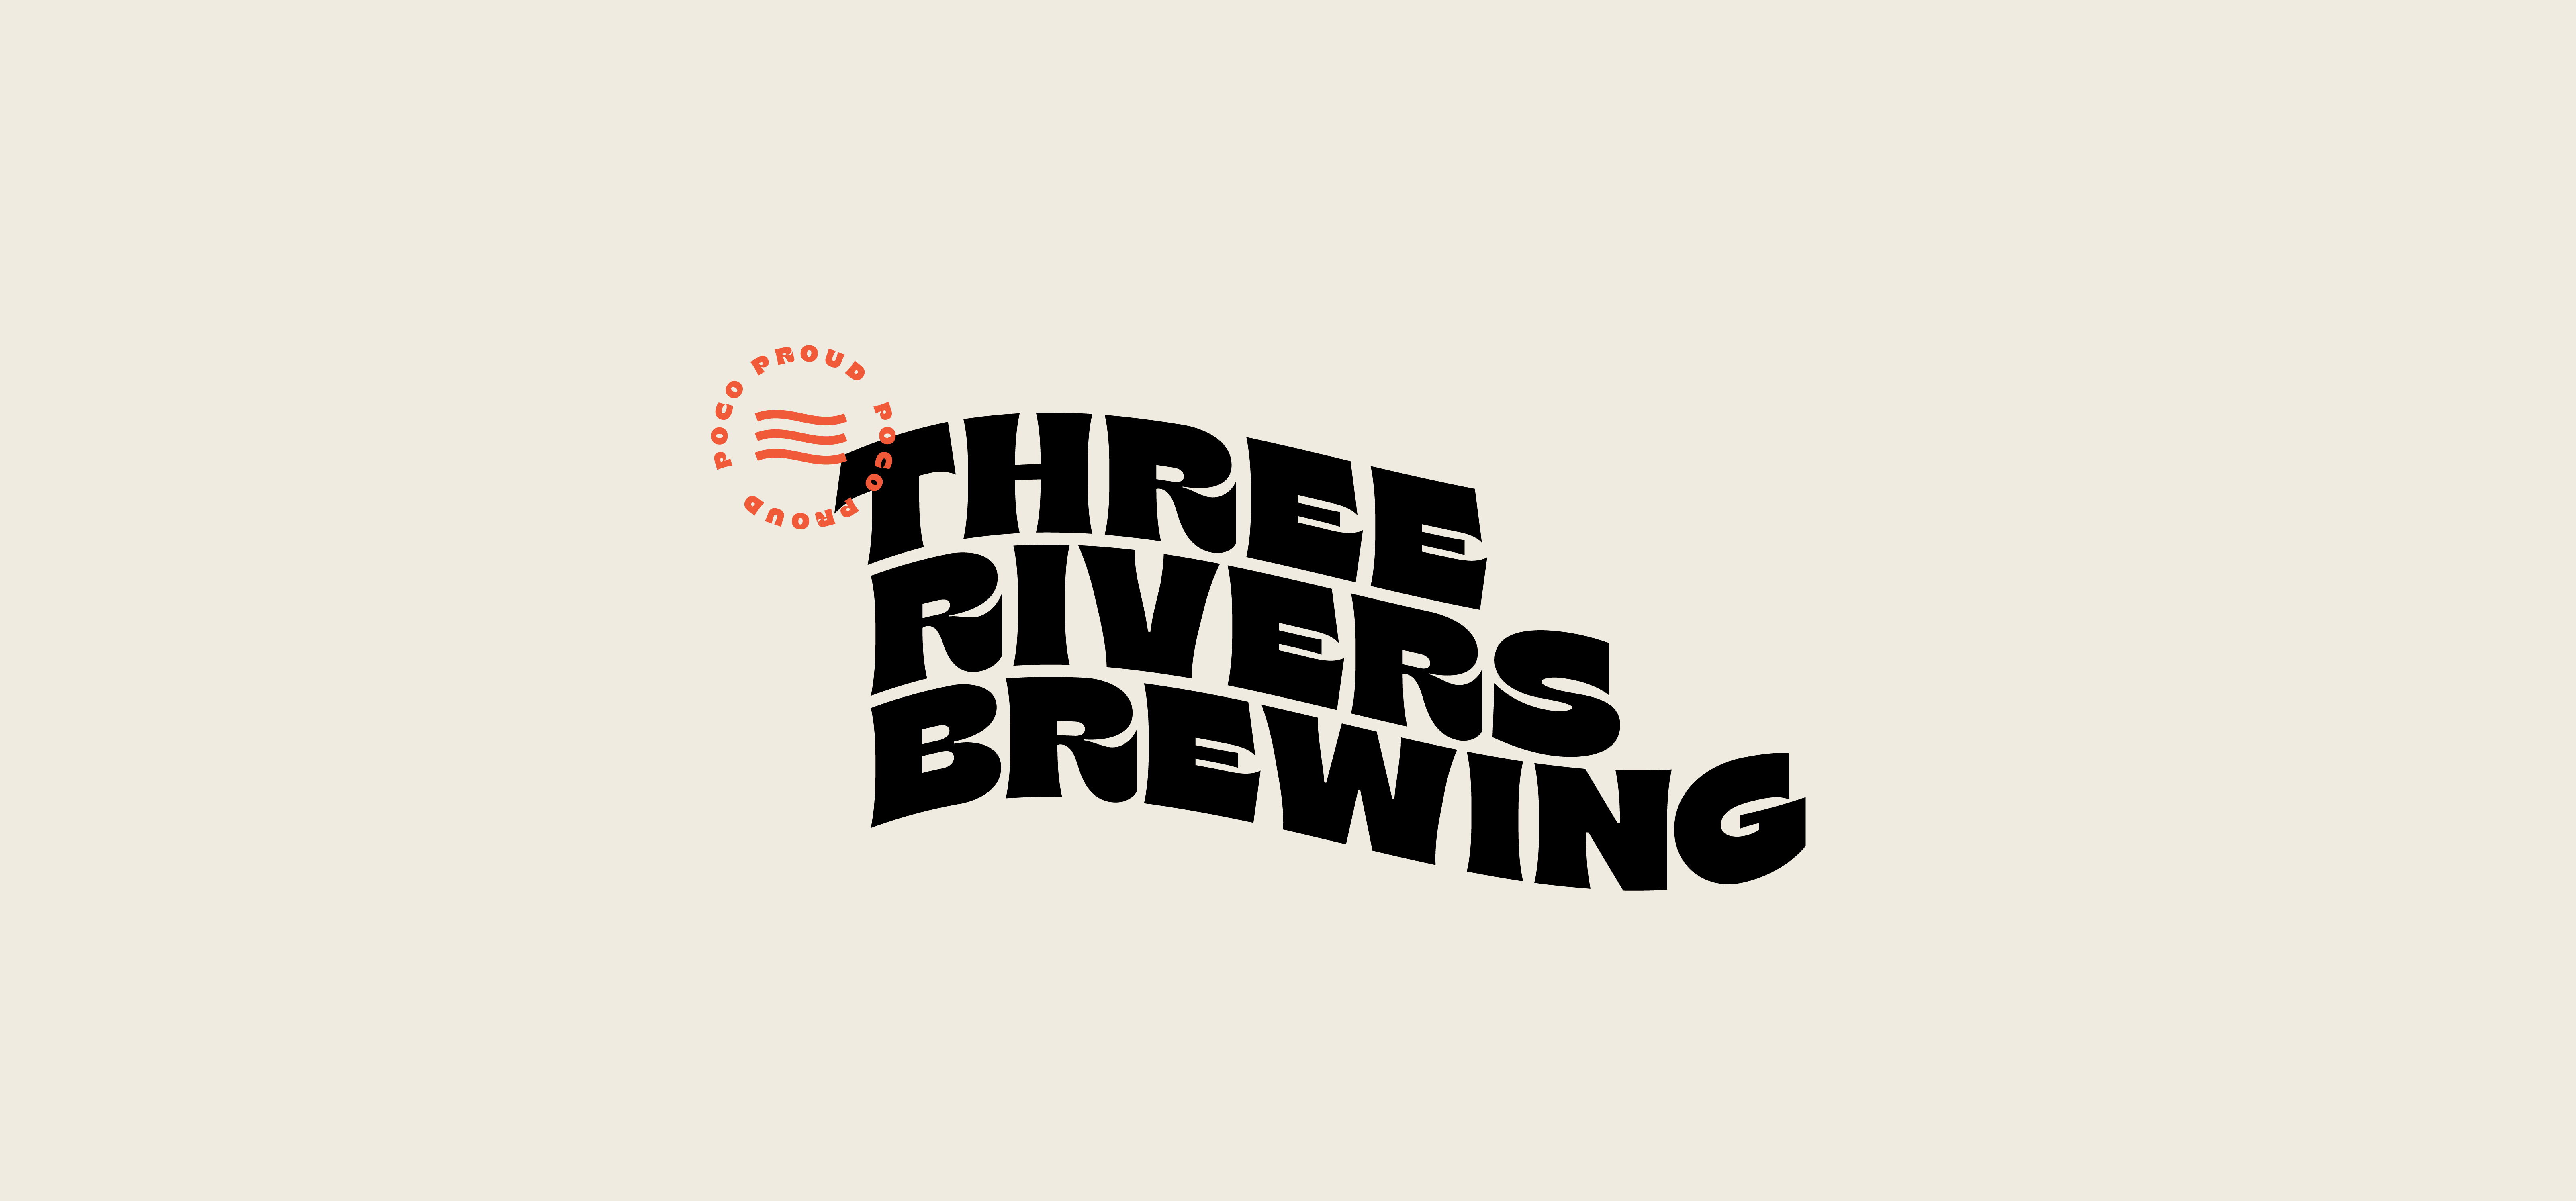 Three Rivers Brewing